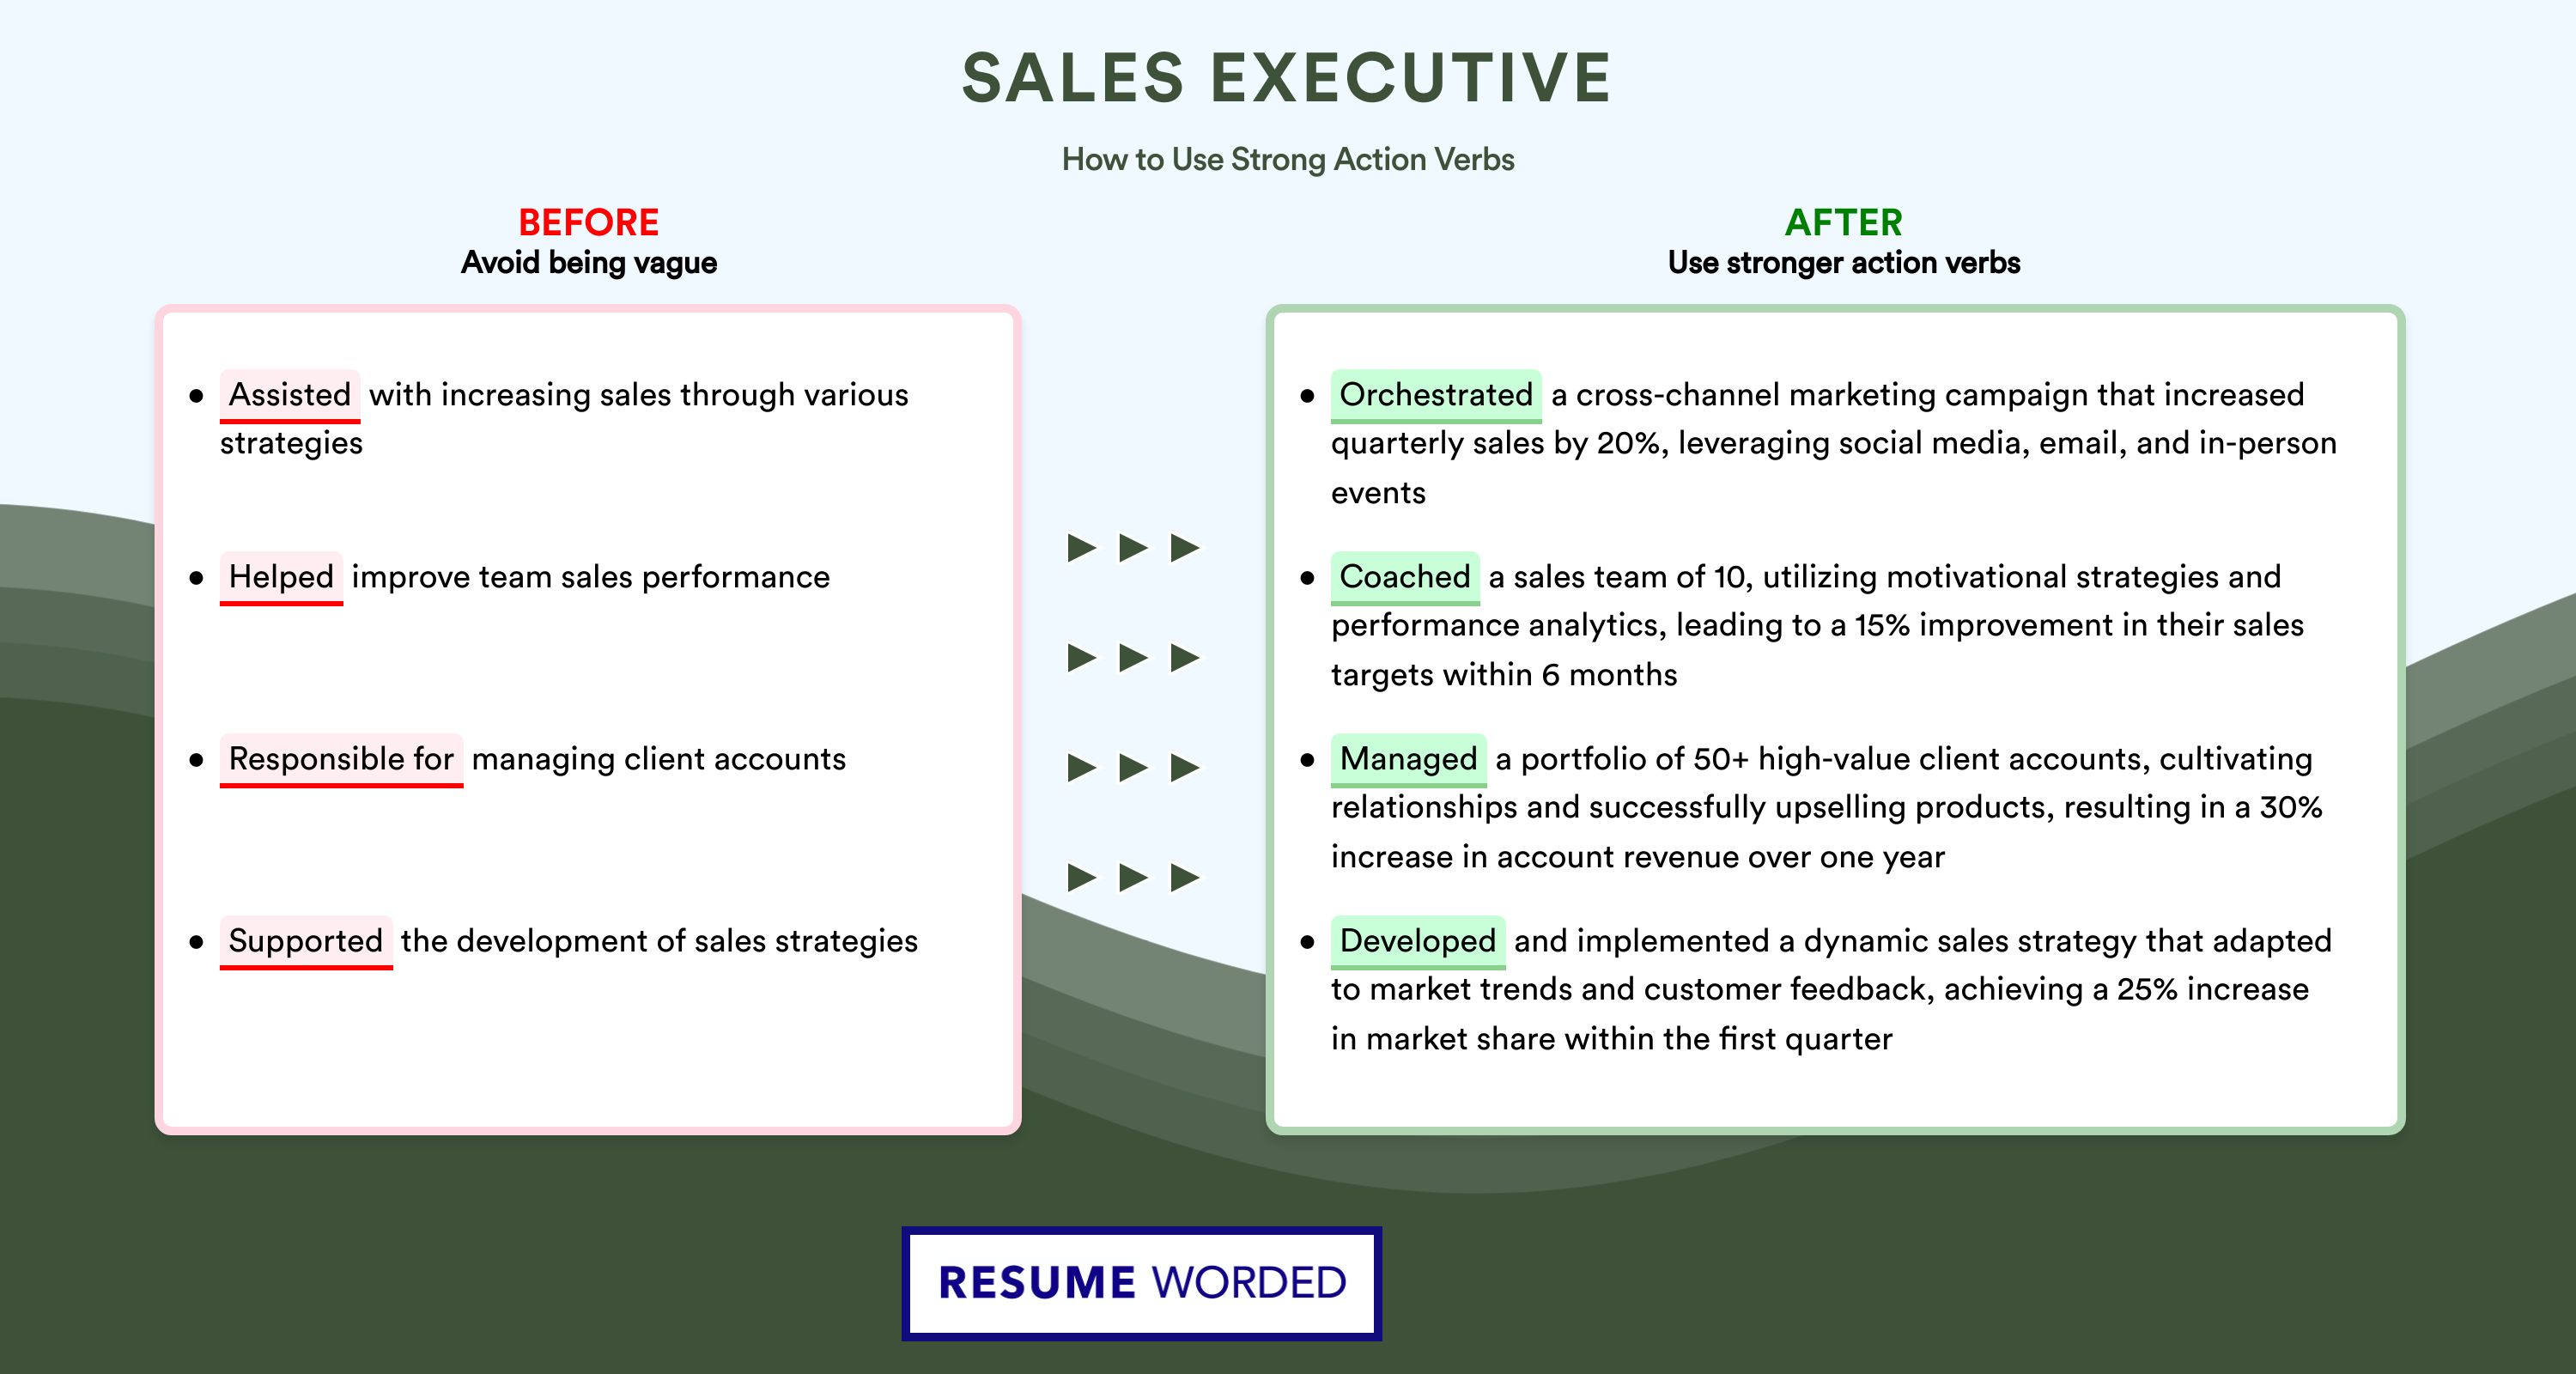 Action Verbs for Sales Executive